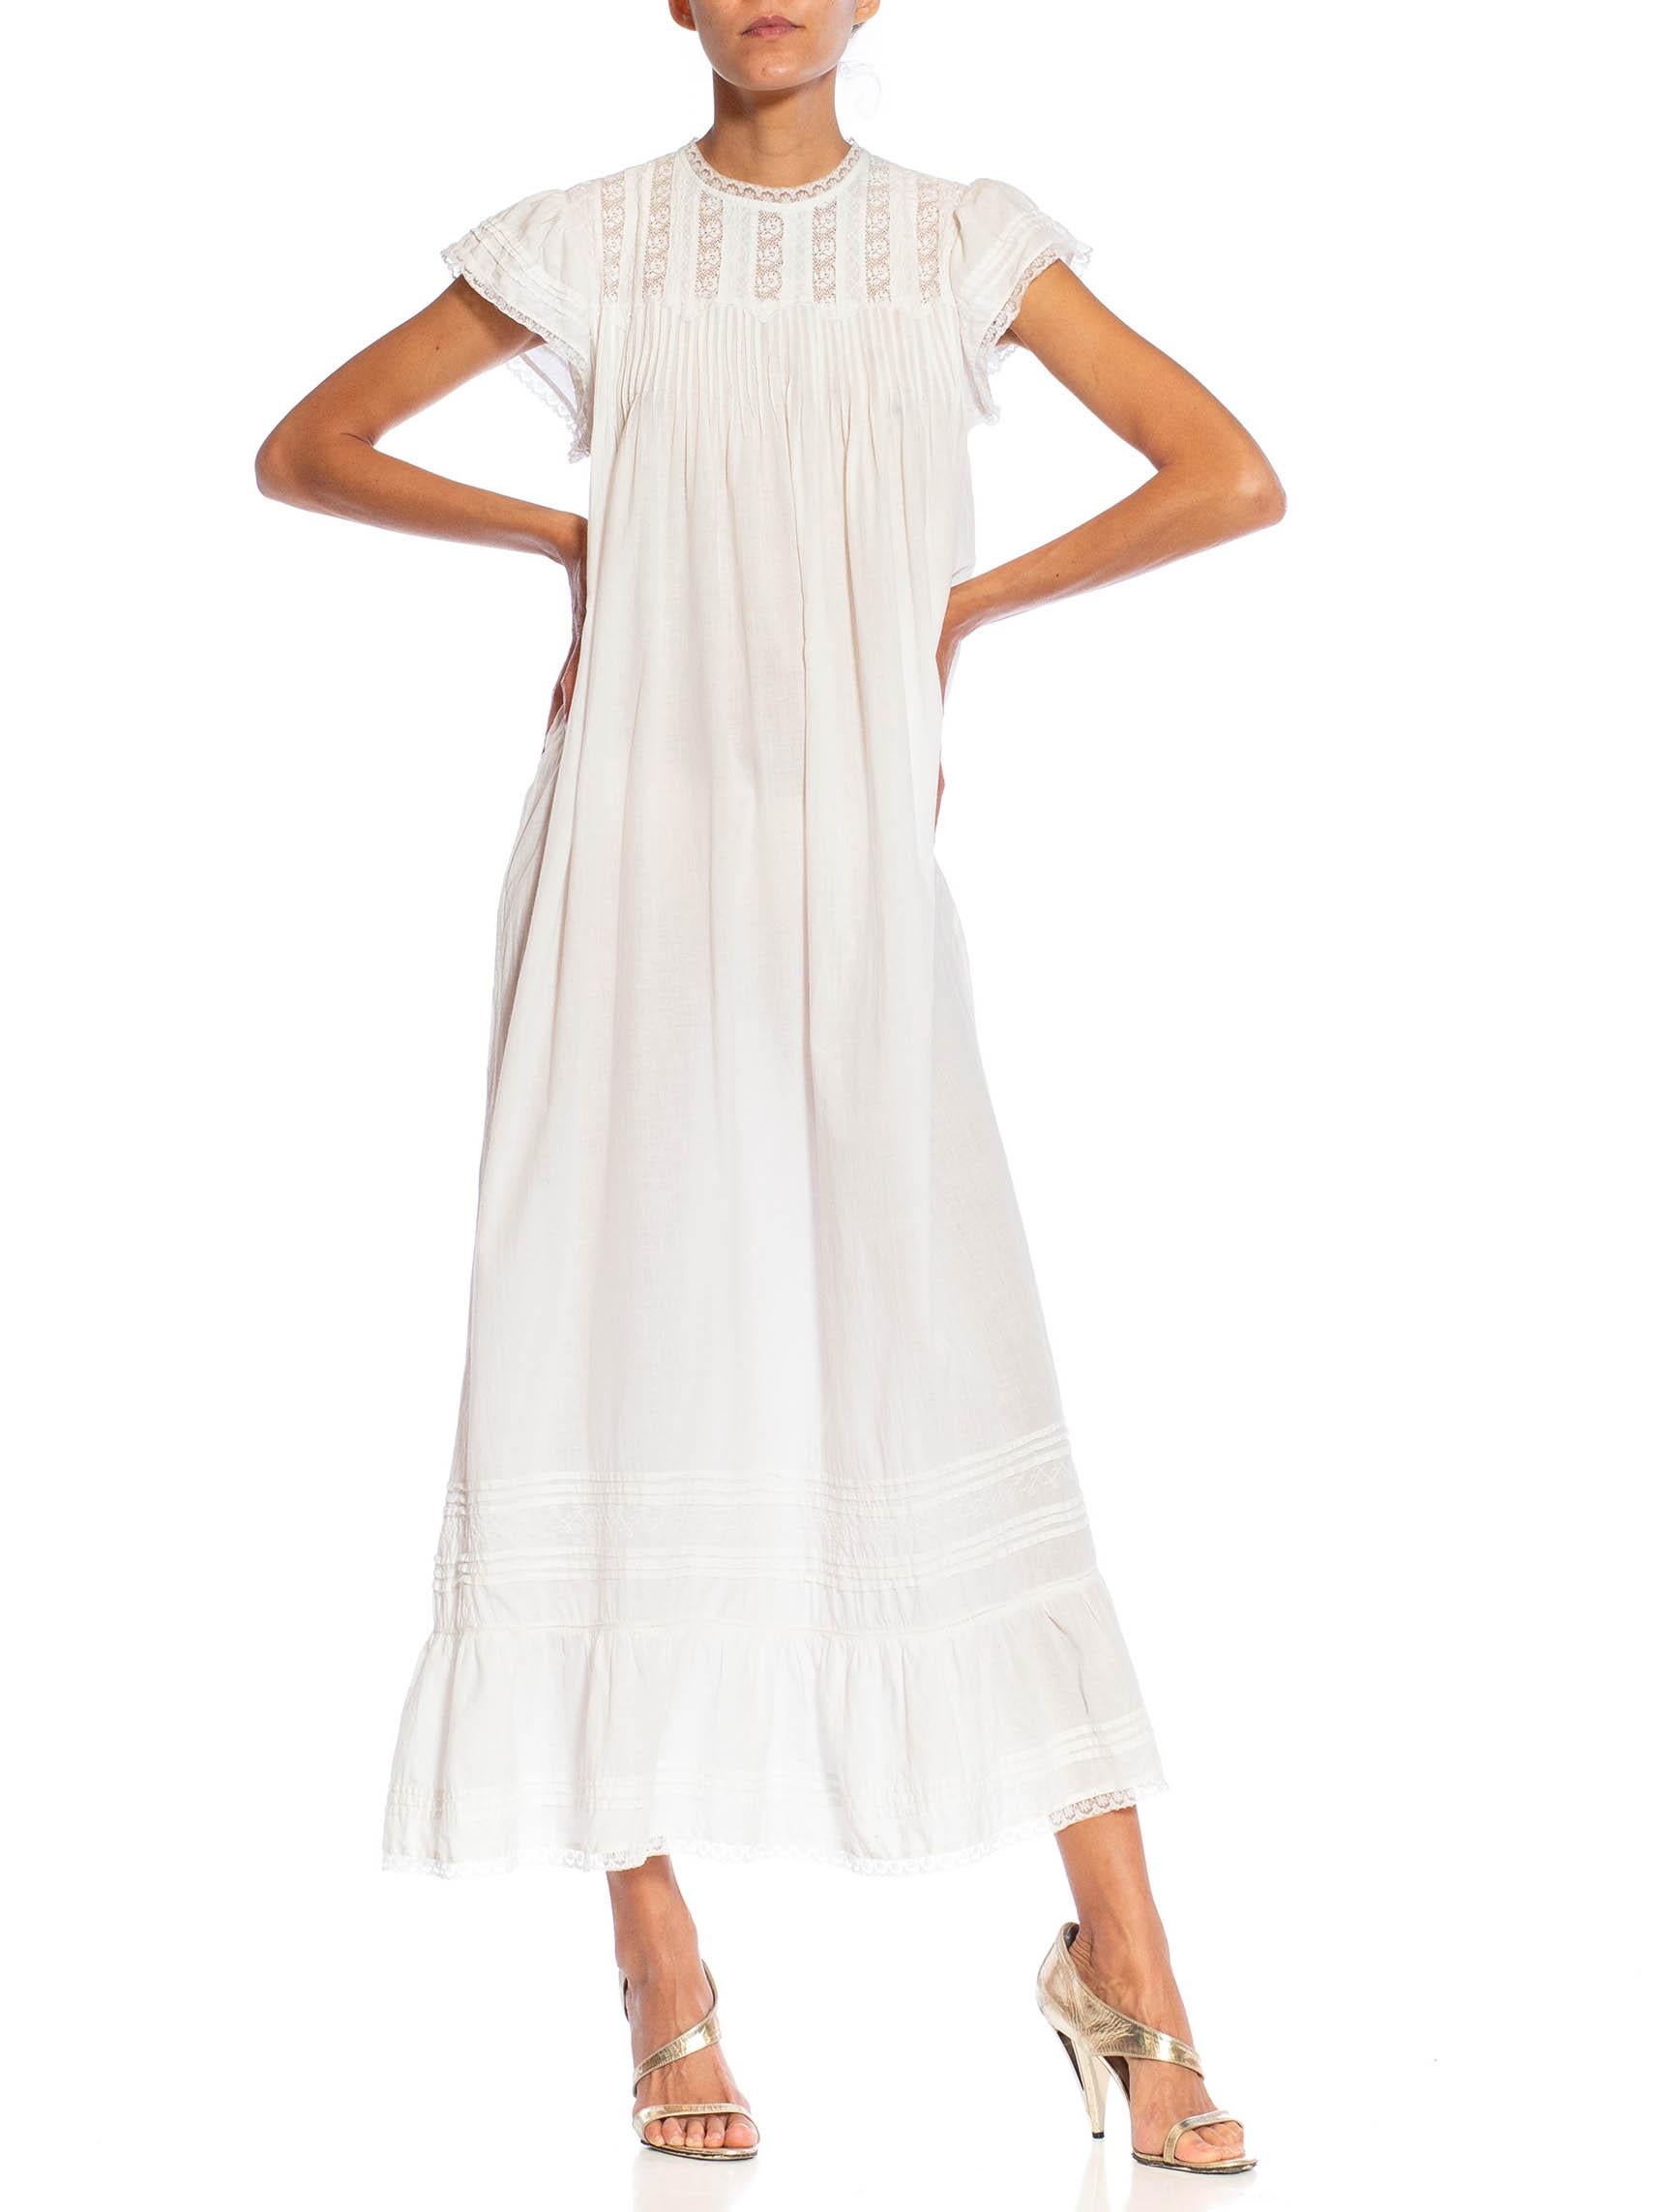 1950S White Cotton Victorian Style Night Shirt Dress 1